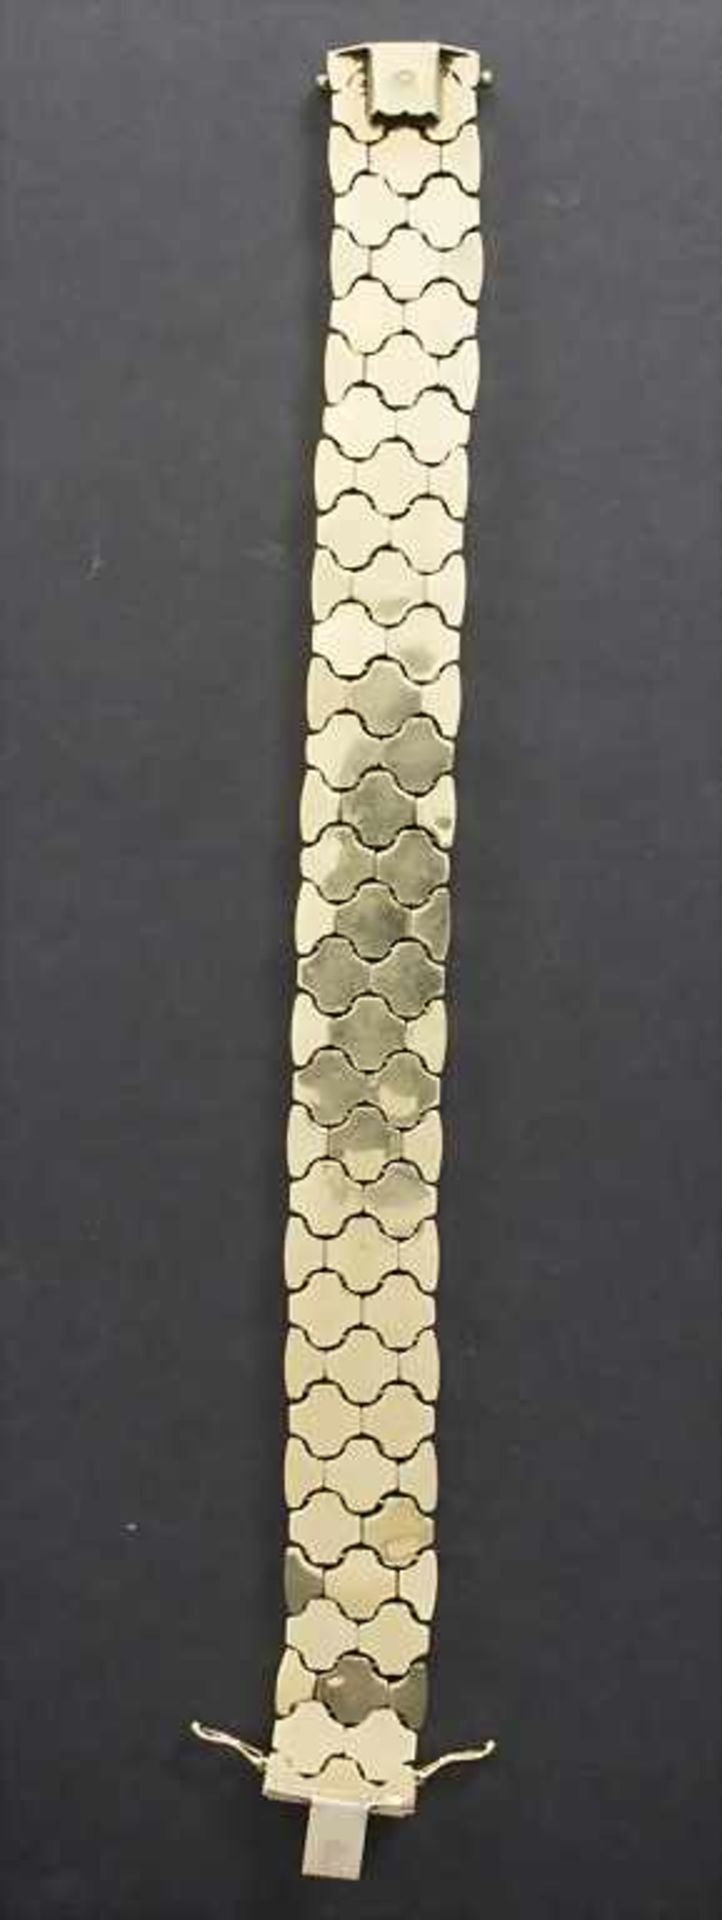 Goldarmband / A gold braceletMaterial: Gelbgold 585/000 14 Kt, Länge: 20,5 cm,Gewicht: 34,7 g, - Image 2 of 3